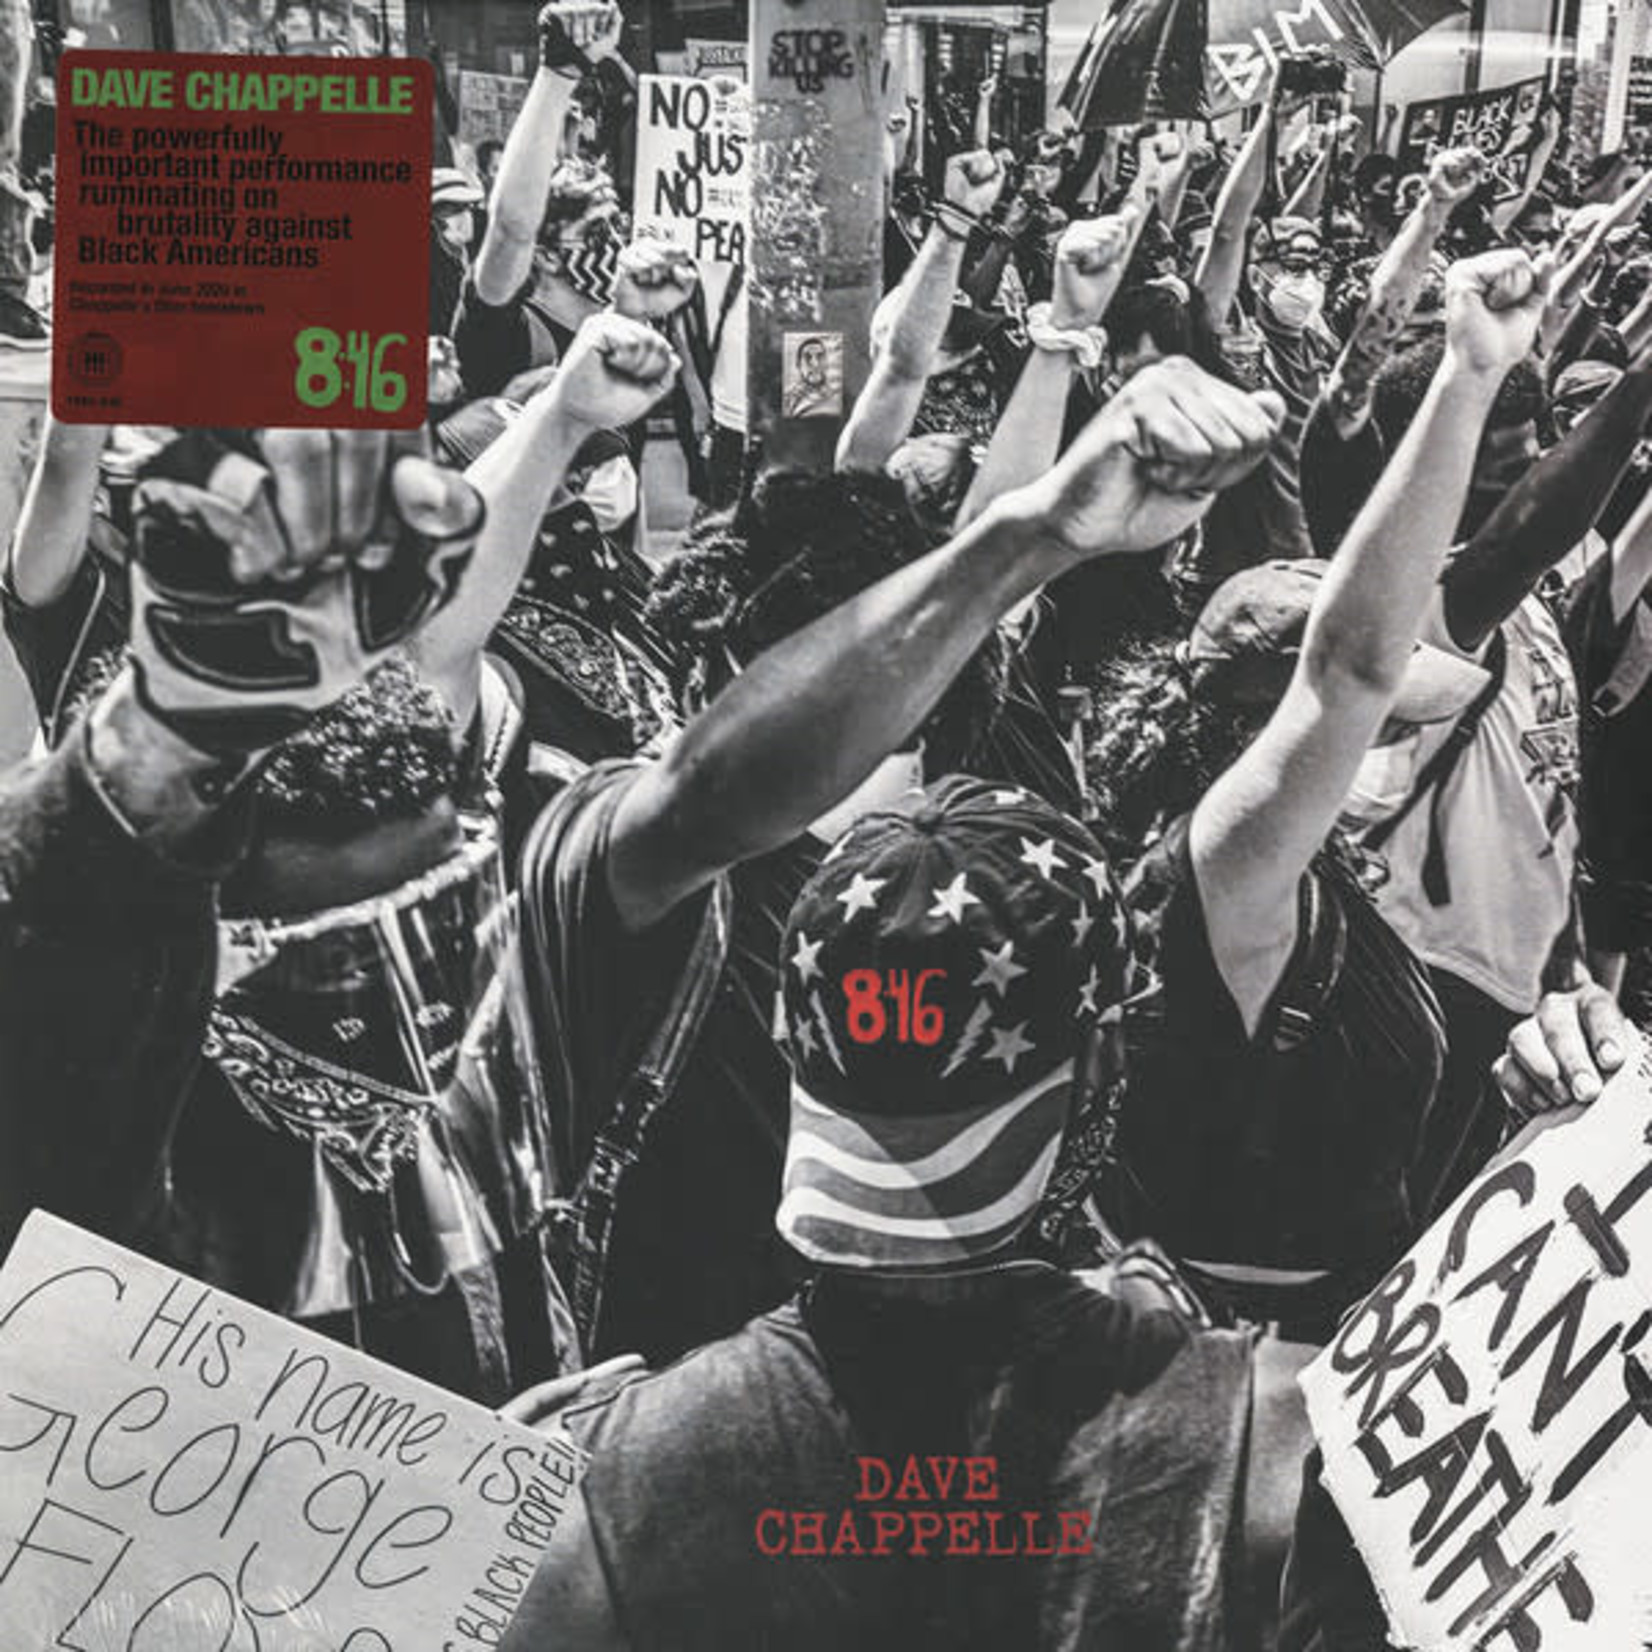 Third Man Dave Chappelle - 846 (LP)